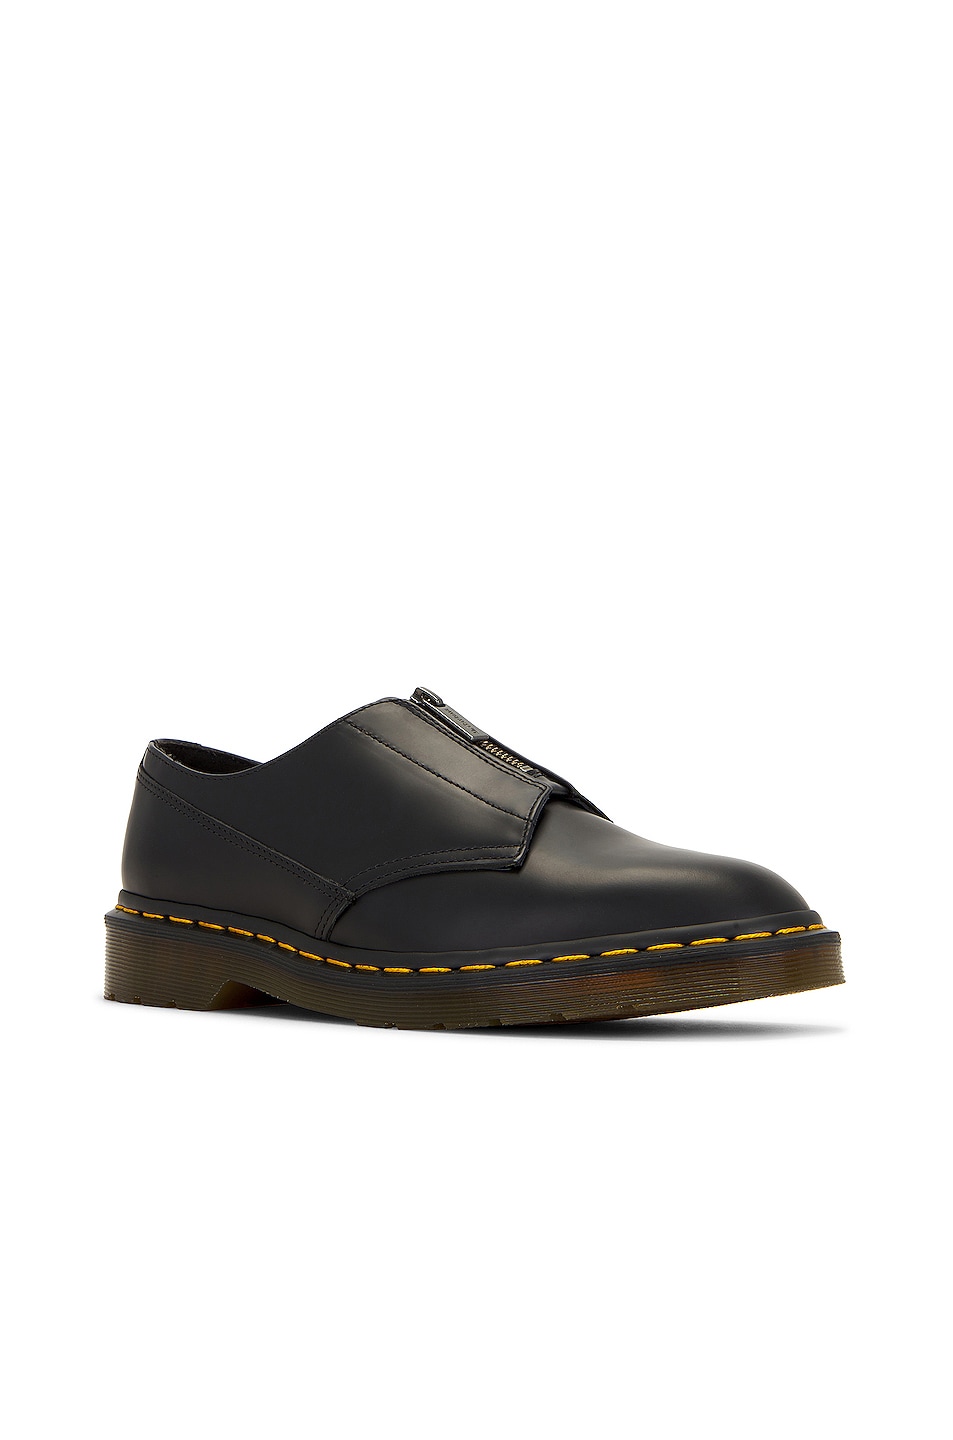 Dr. Martens Cullen Polished Smooth Shoe in Black | FWRD